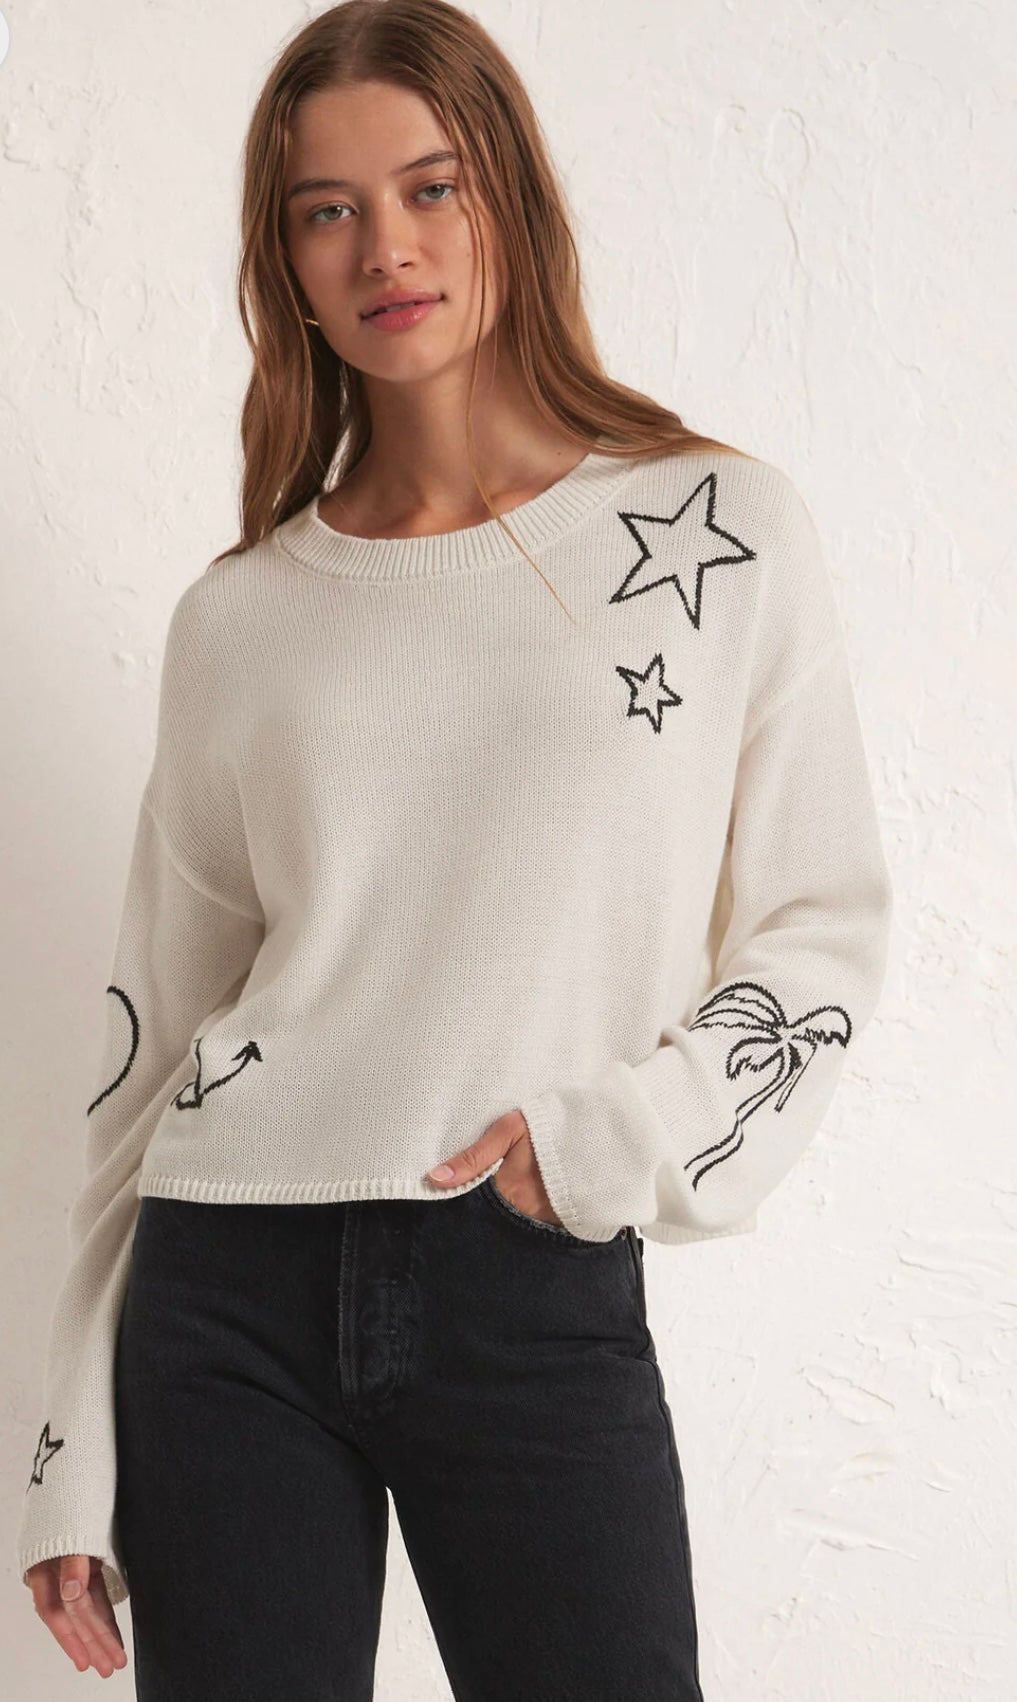 White sweater w/blk Stars